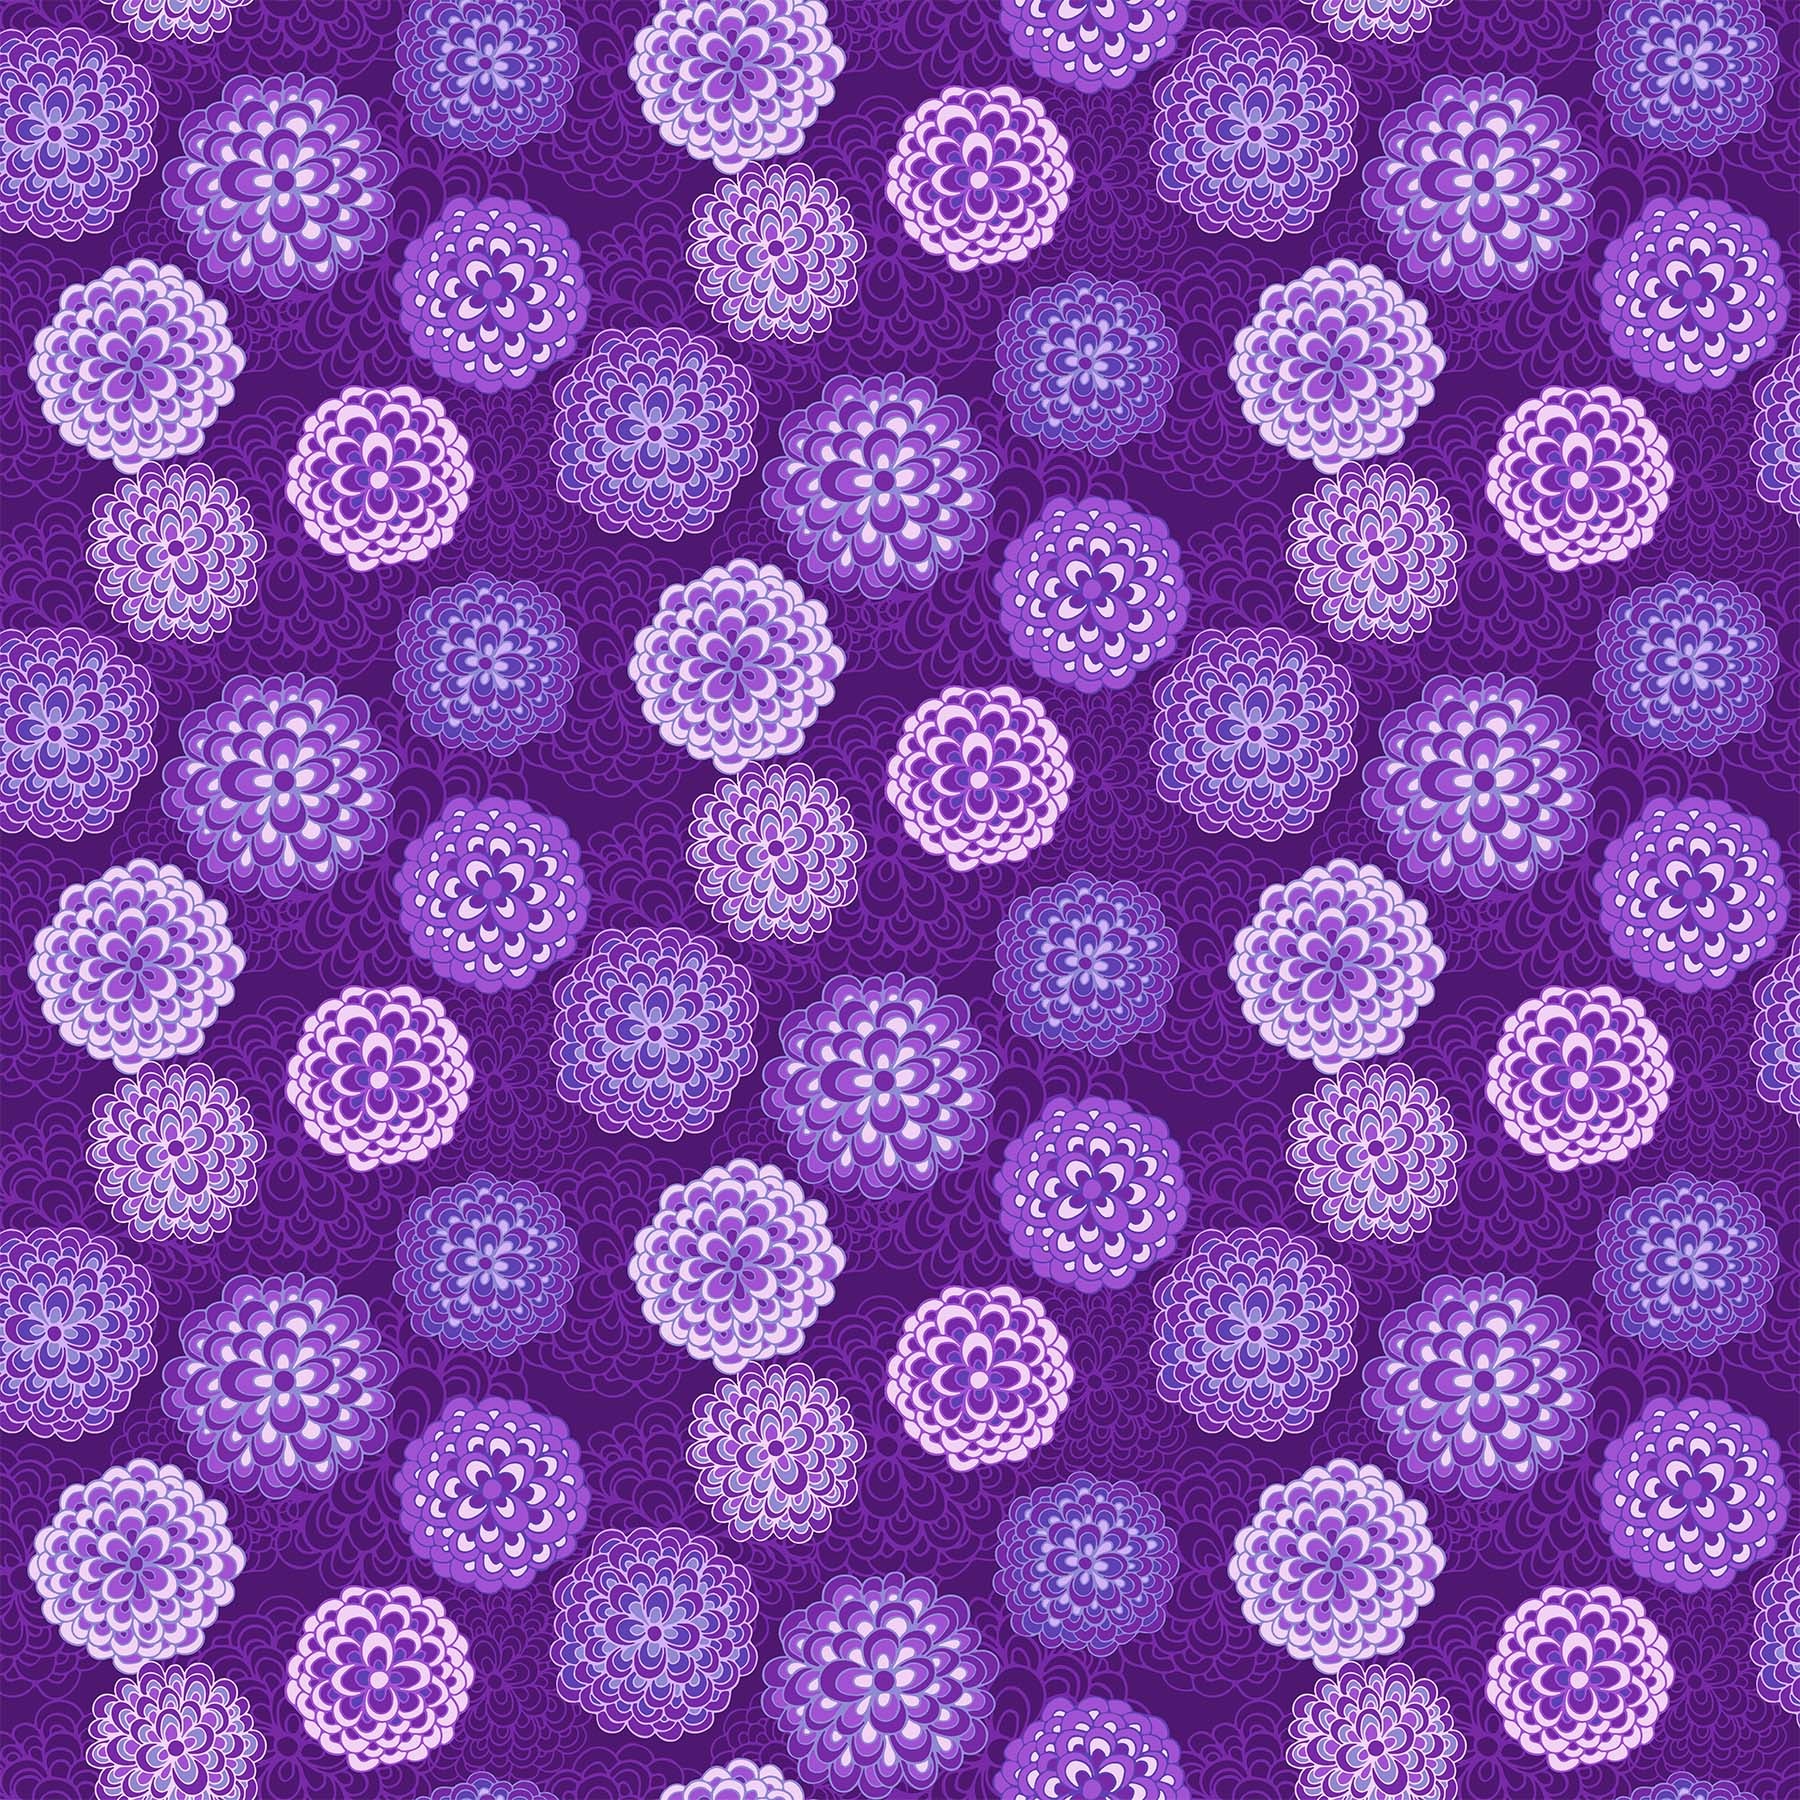 Happiness Quilt Fabric - Pompom Dahlias in Purple/Multi - 90595-85